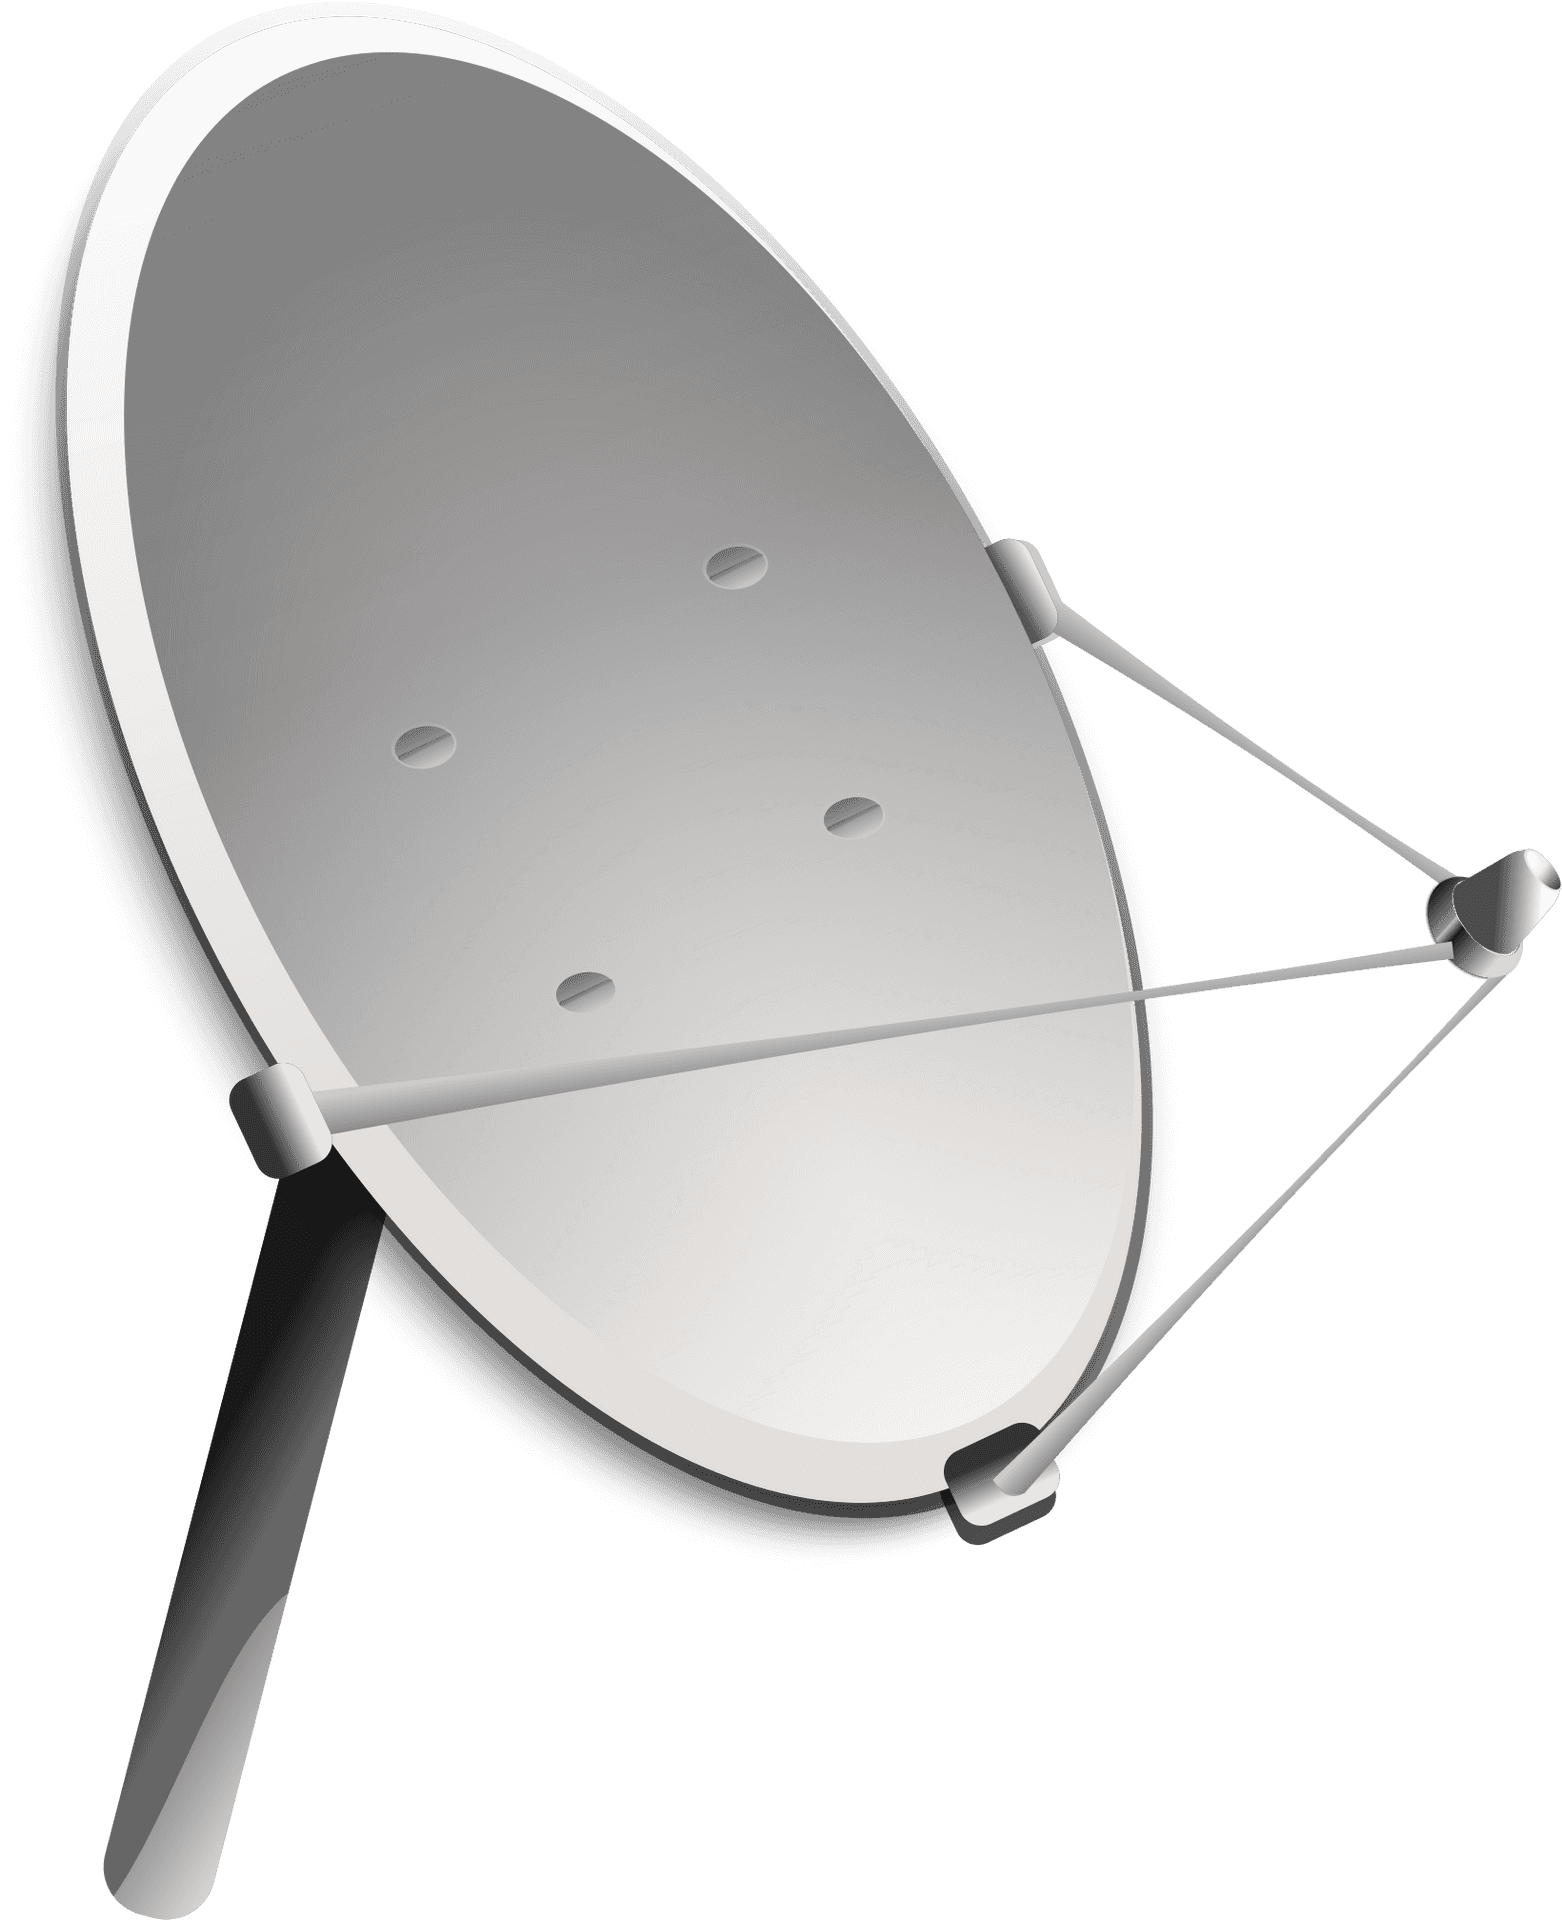 Satellite Dish Graphic PNG image